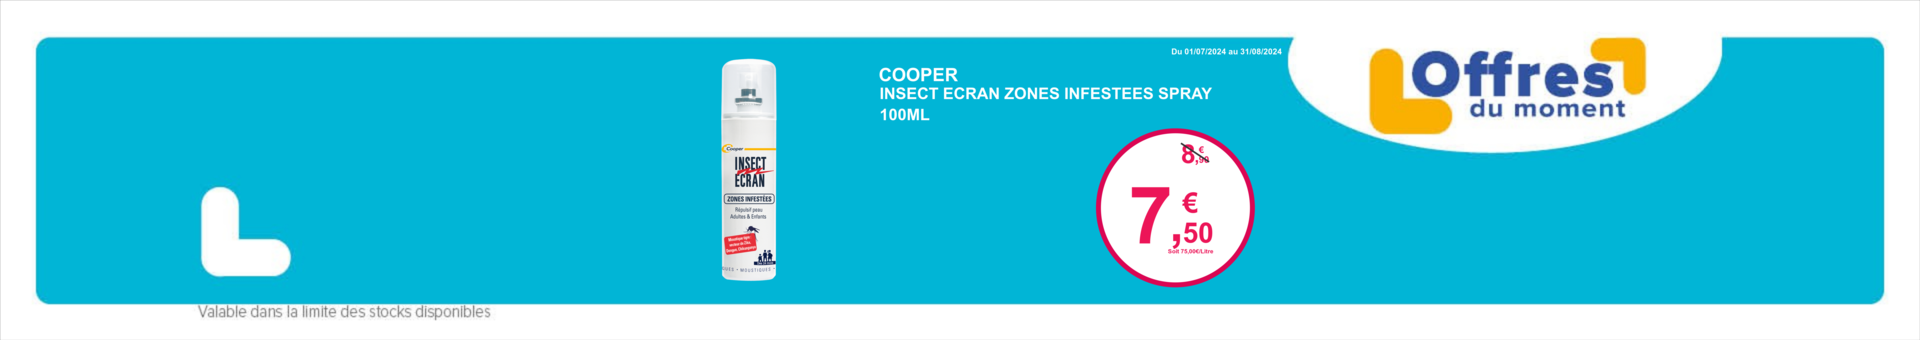 INSECT ECRAN ZONES INFESTEES SPRAY 100ML